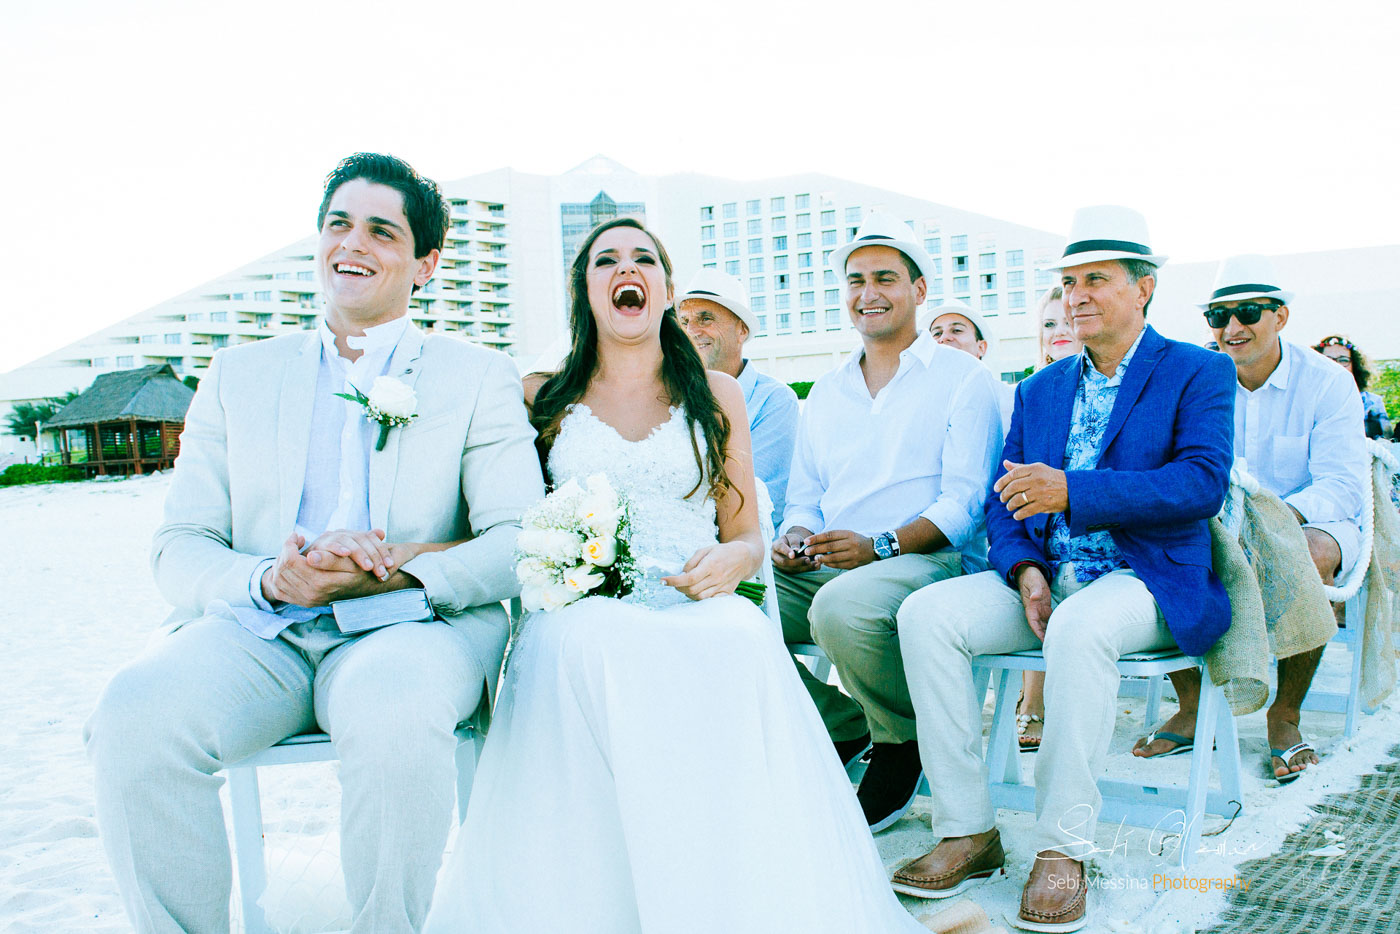 Great Parnassus Resort Wedding - Sebi Messina Photography